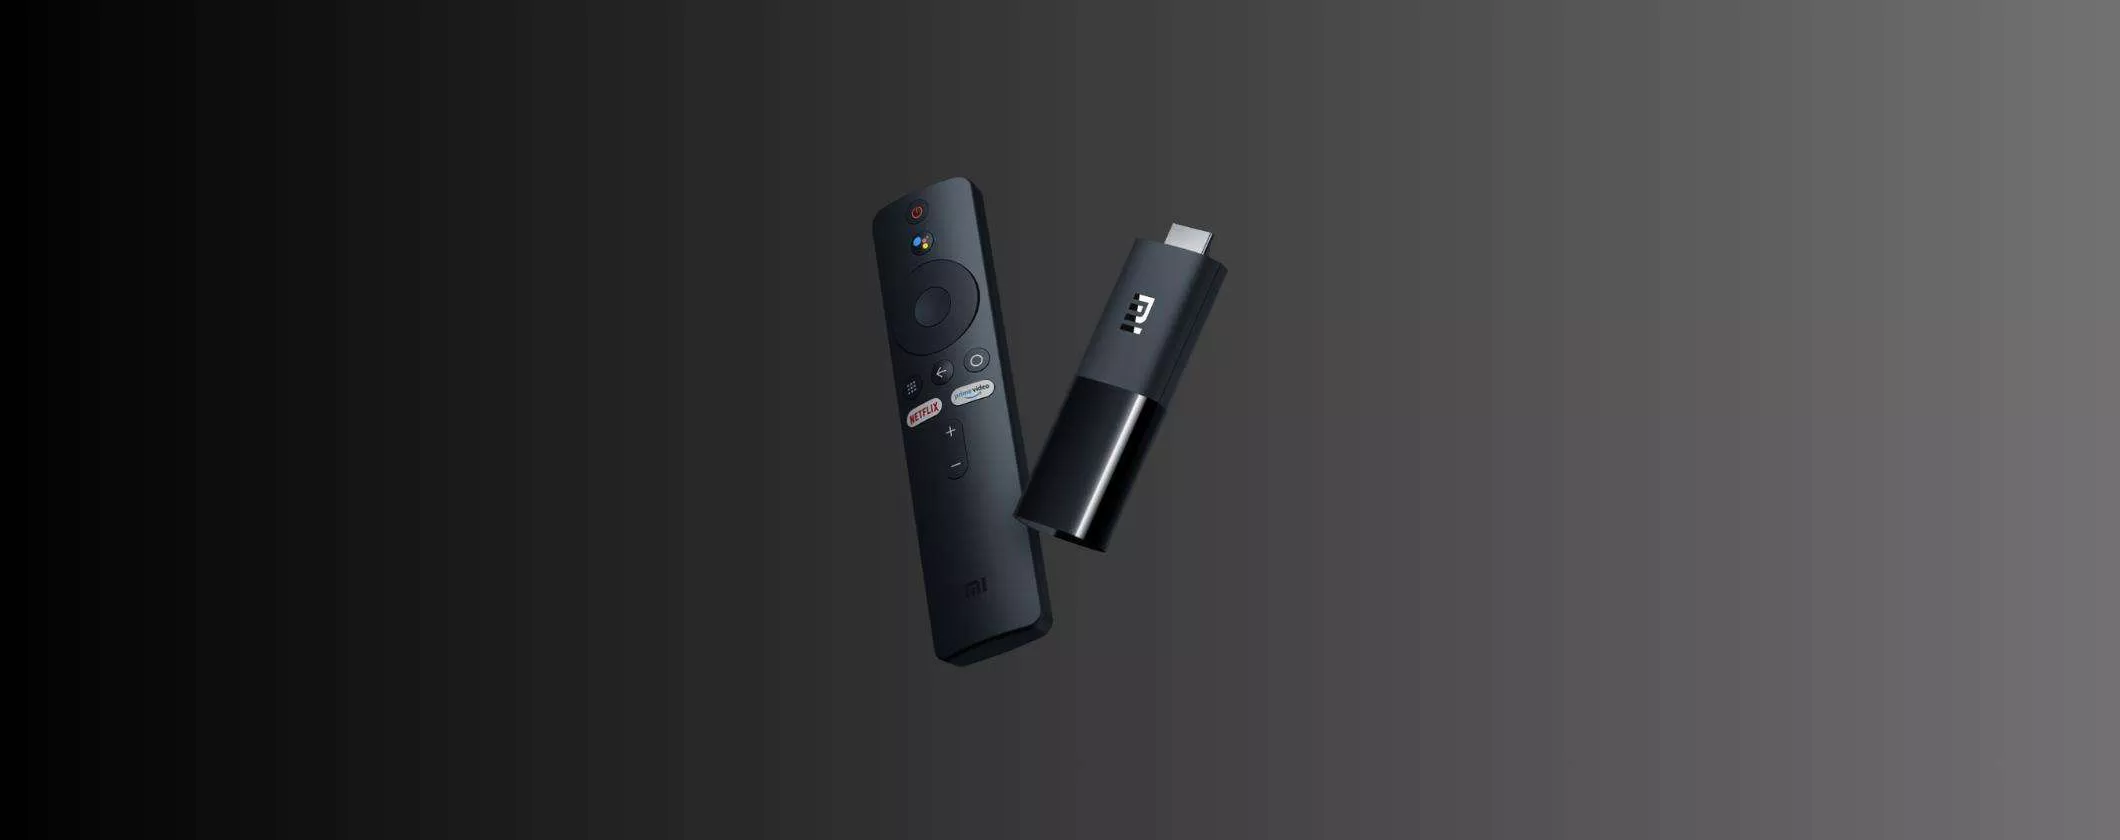 Xiaomi Mi TV Stick: SOLO OGGI a 29,99€